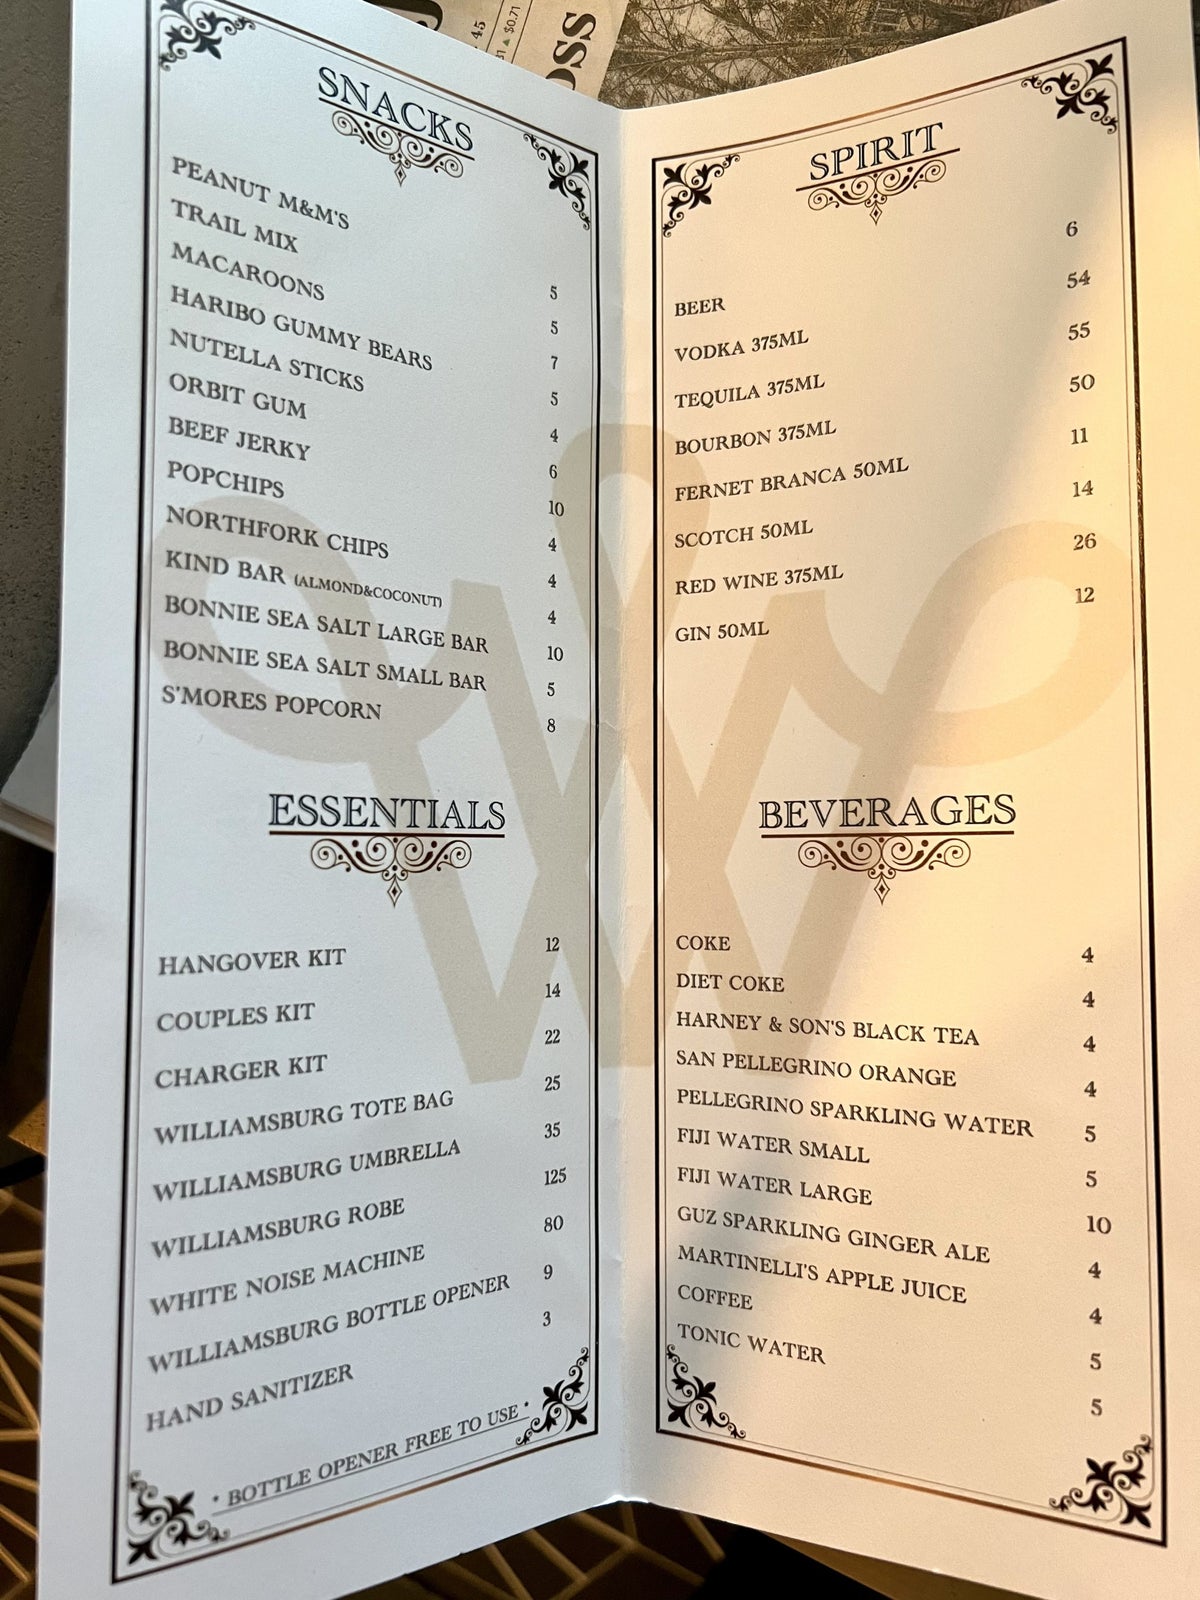 The Williamsburg Hotel bedroom minibar price list